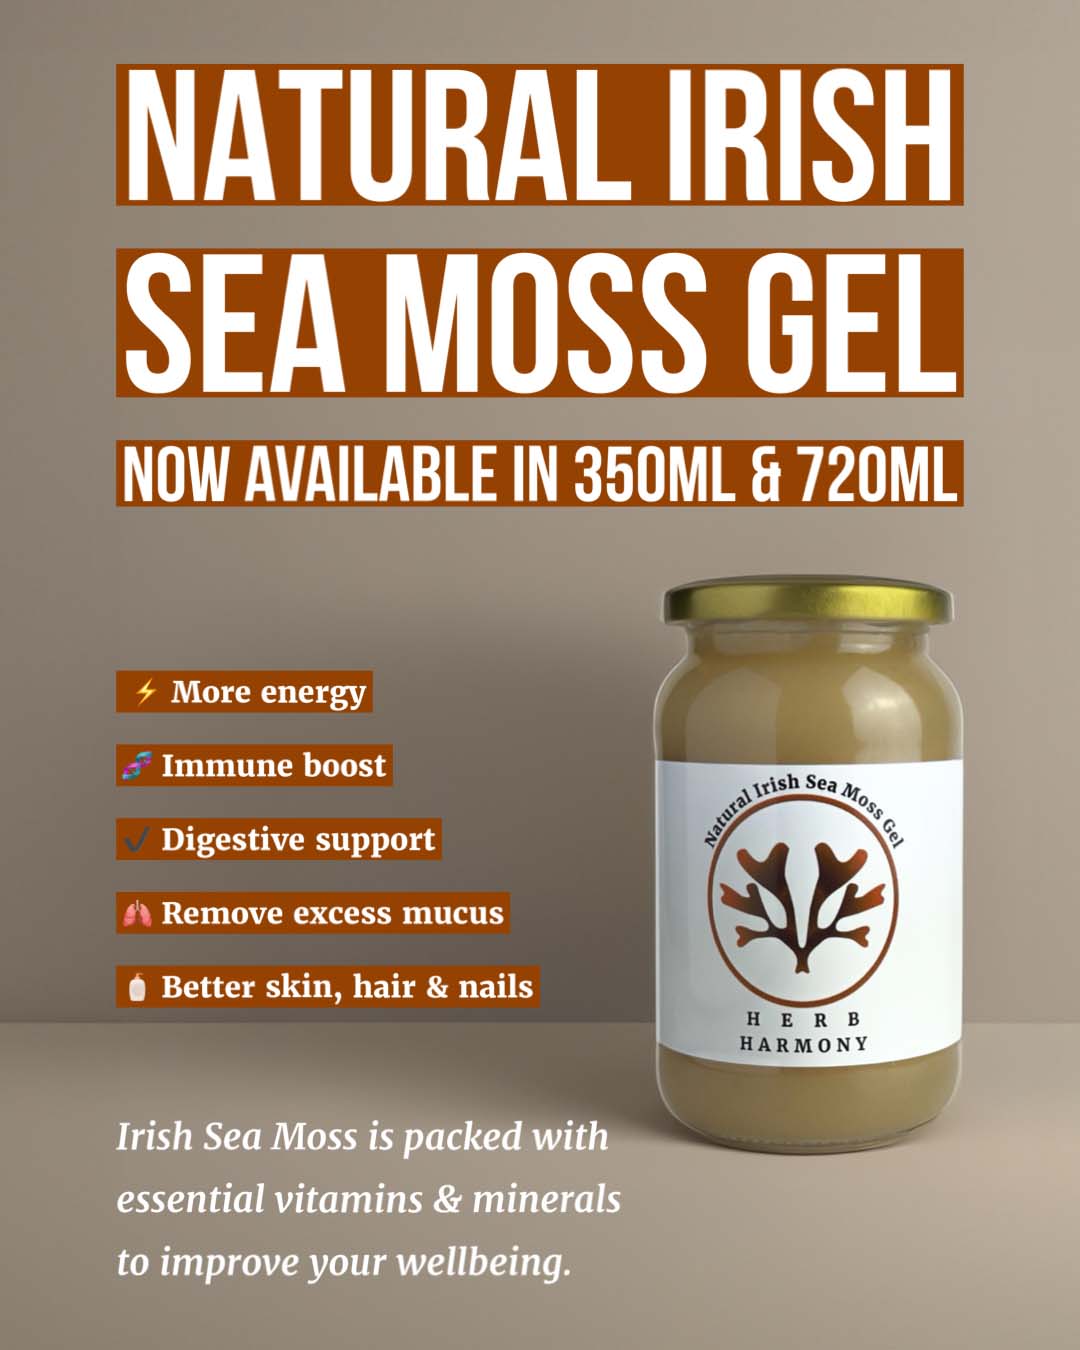 Sea Moss Gel Benefits